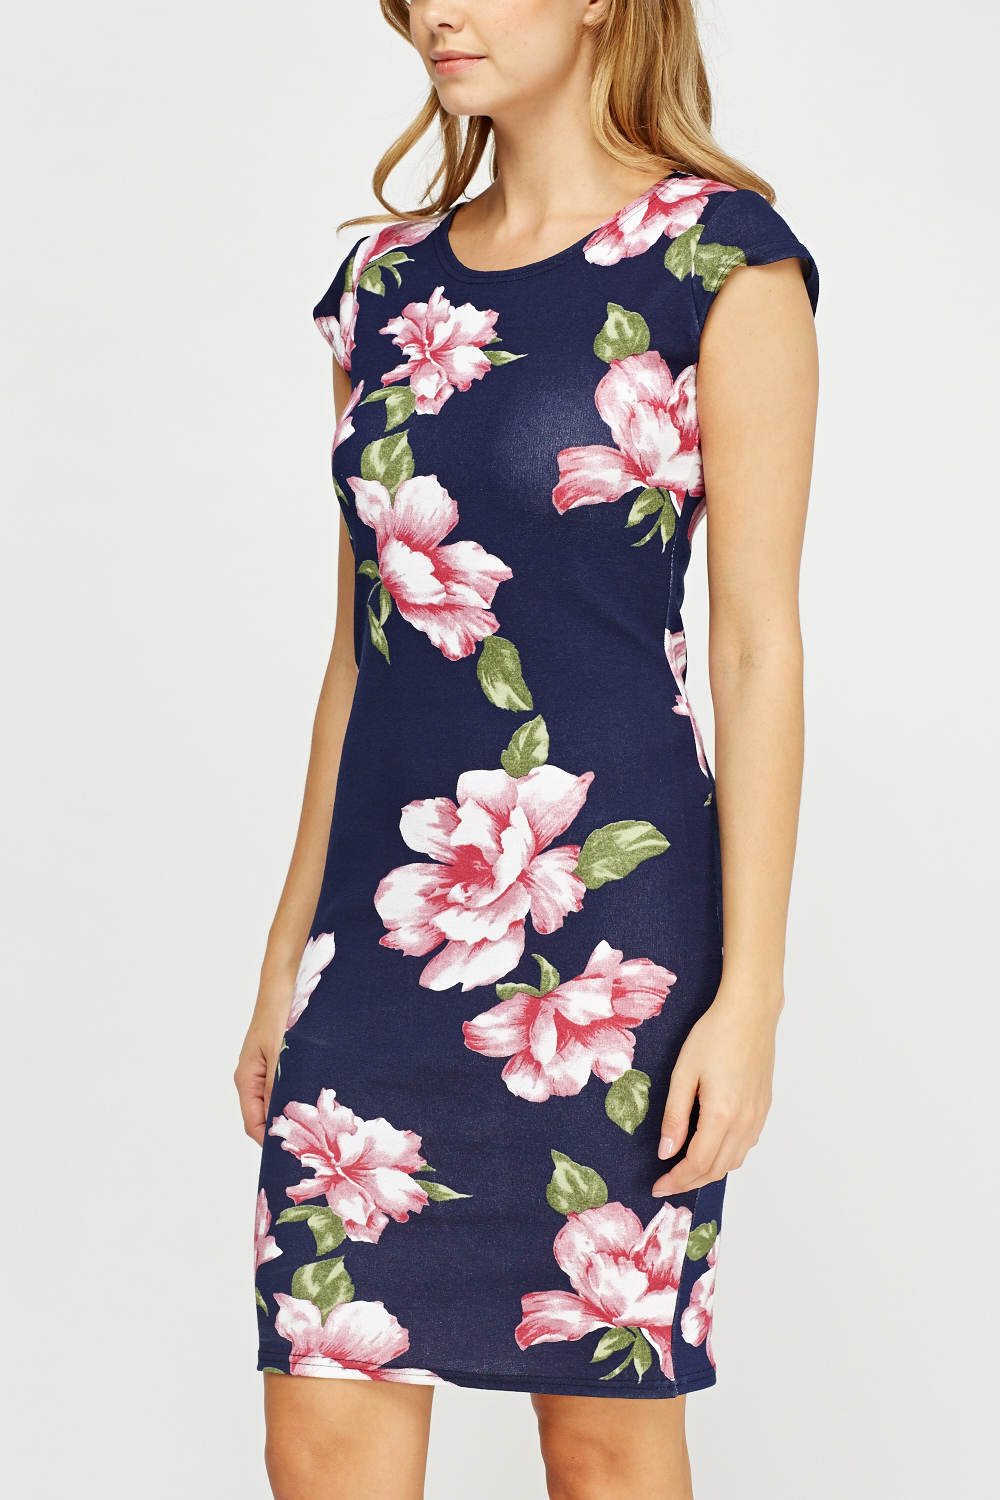 Cap Sleeve Floral Dress - Just $7